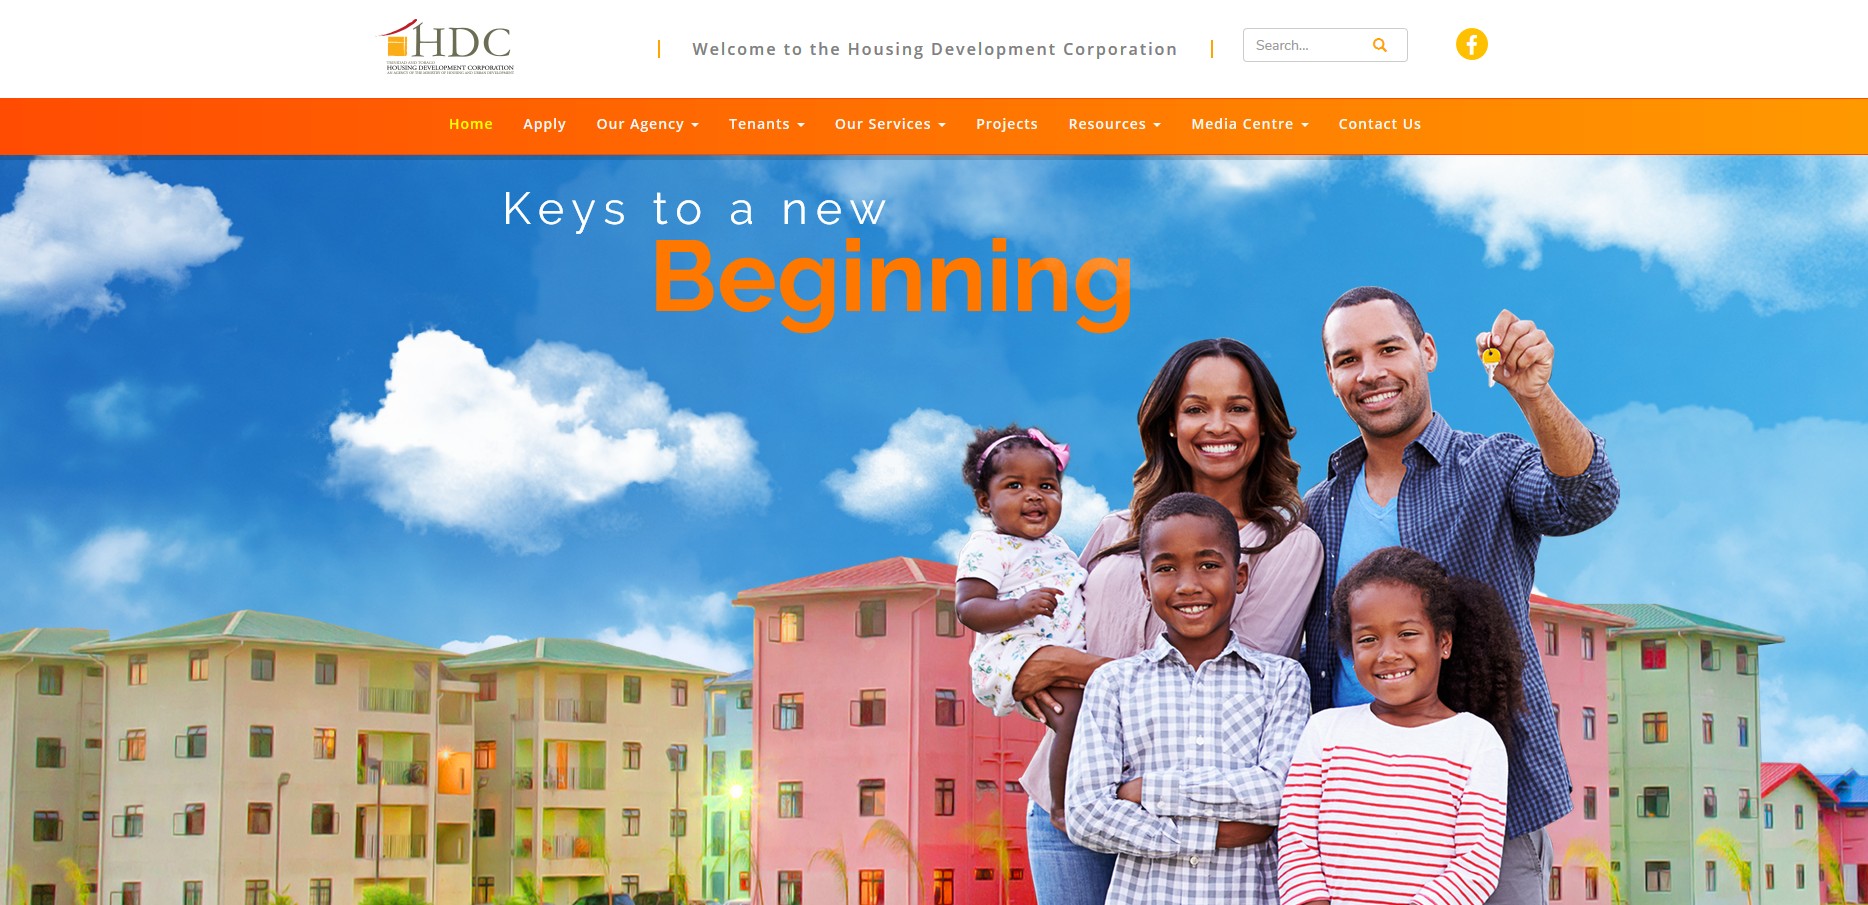 HDC | Keys To a New Beginning